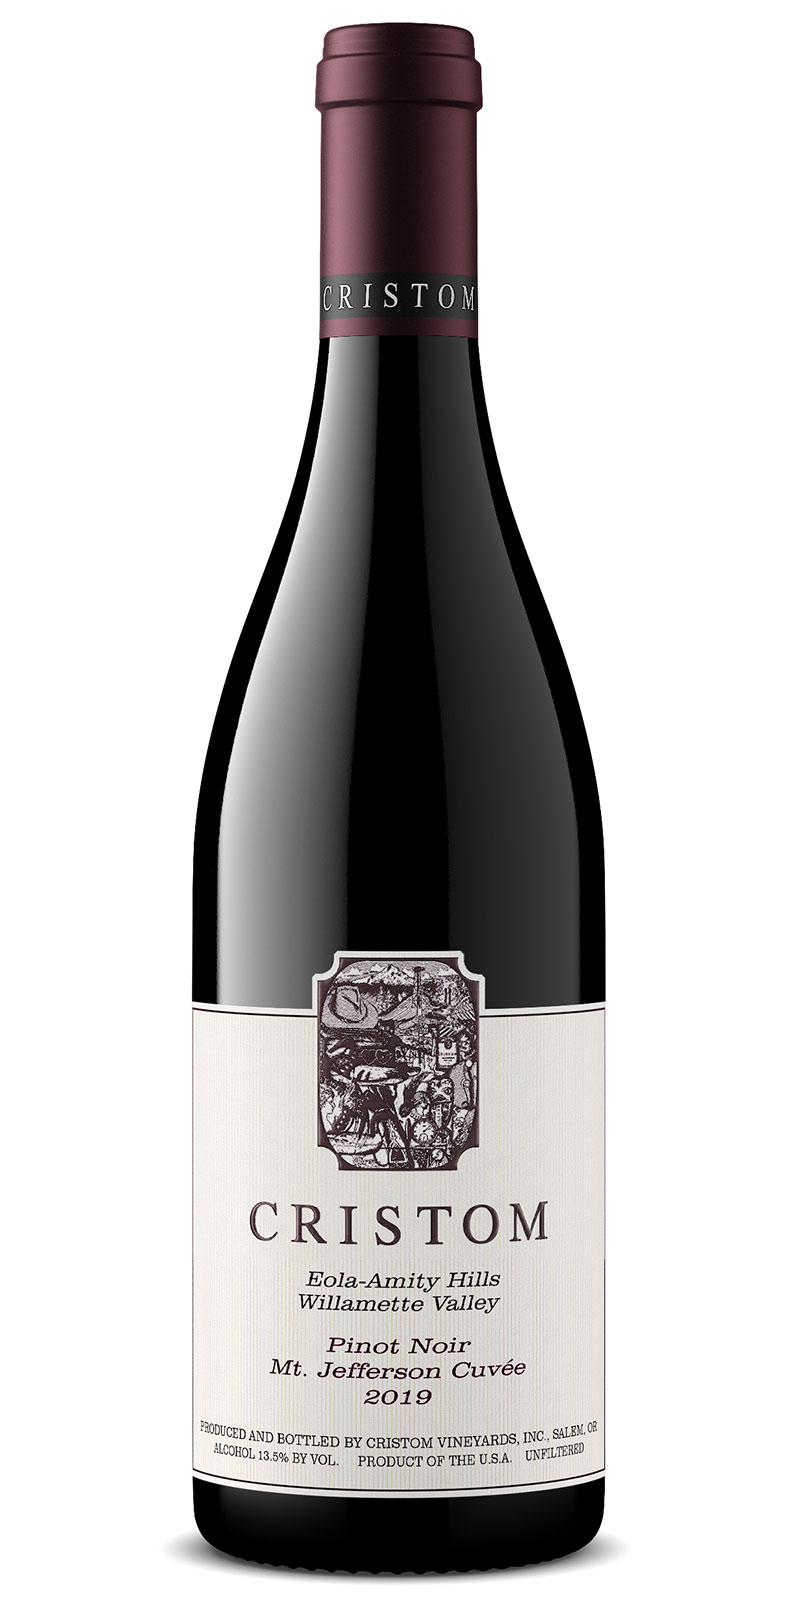 Bottle of Cristom Vineyards 2019 Pinot Noir Mt. Jefferson Cuvee